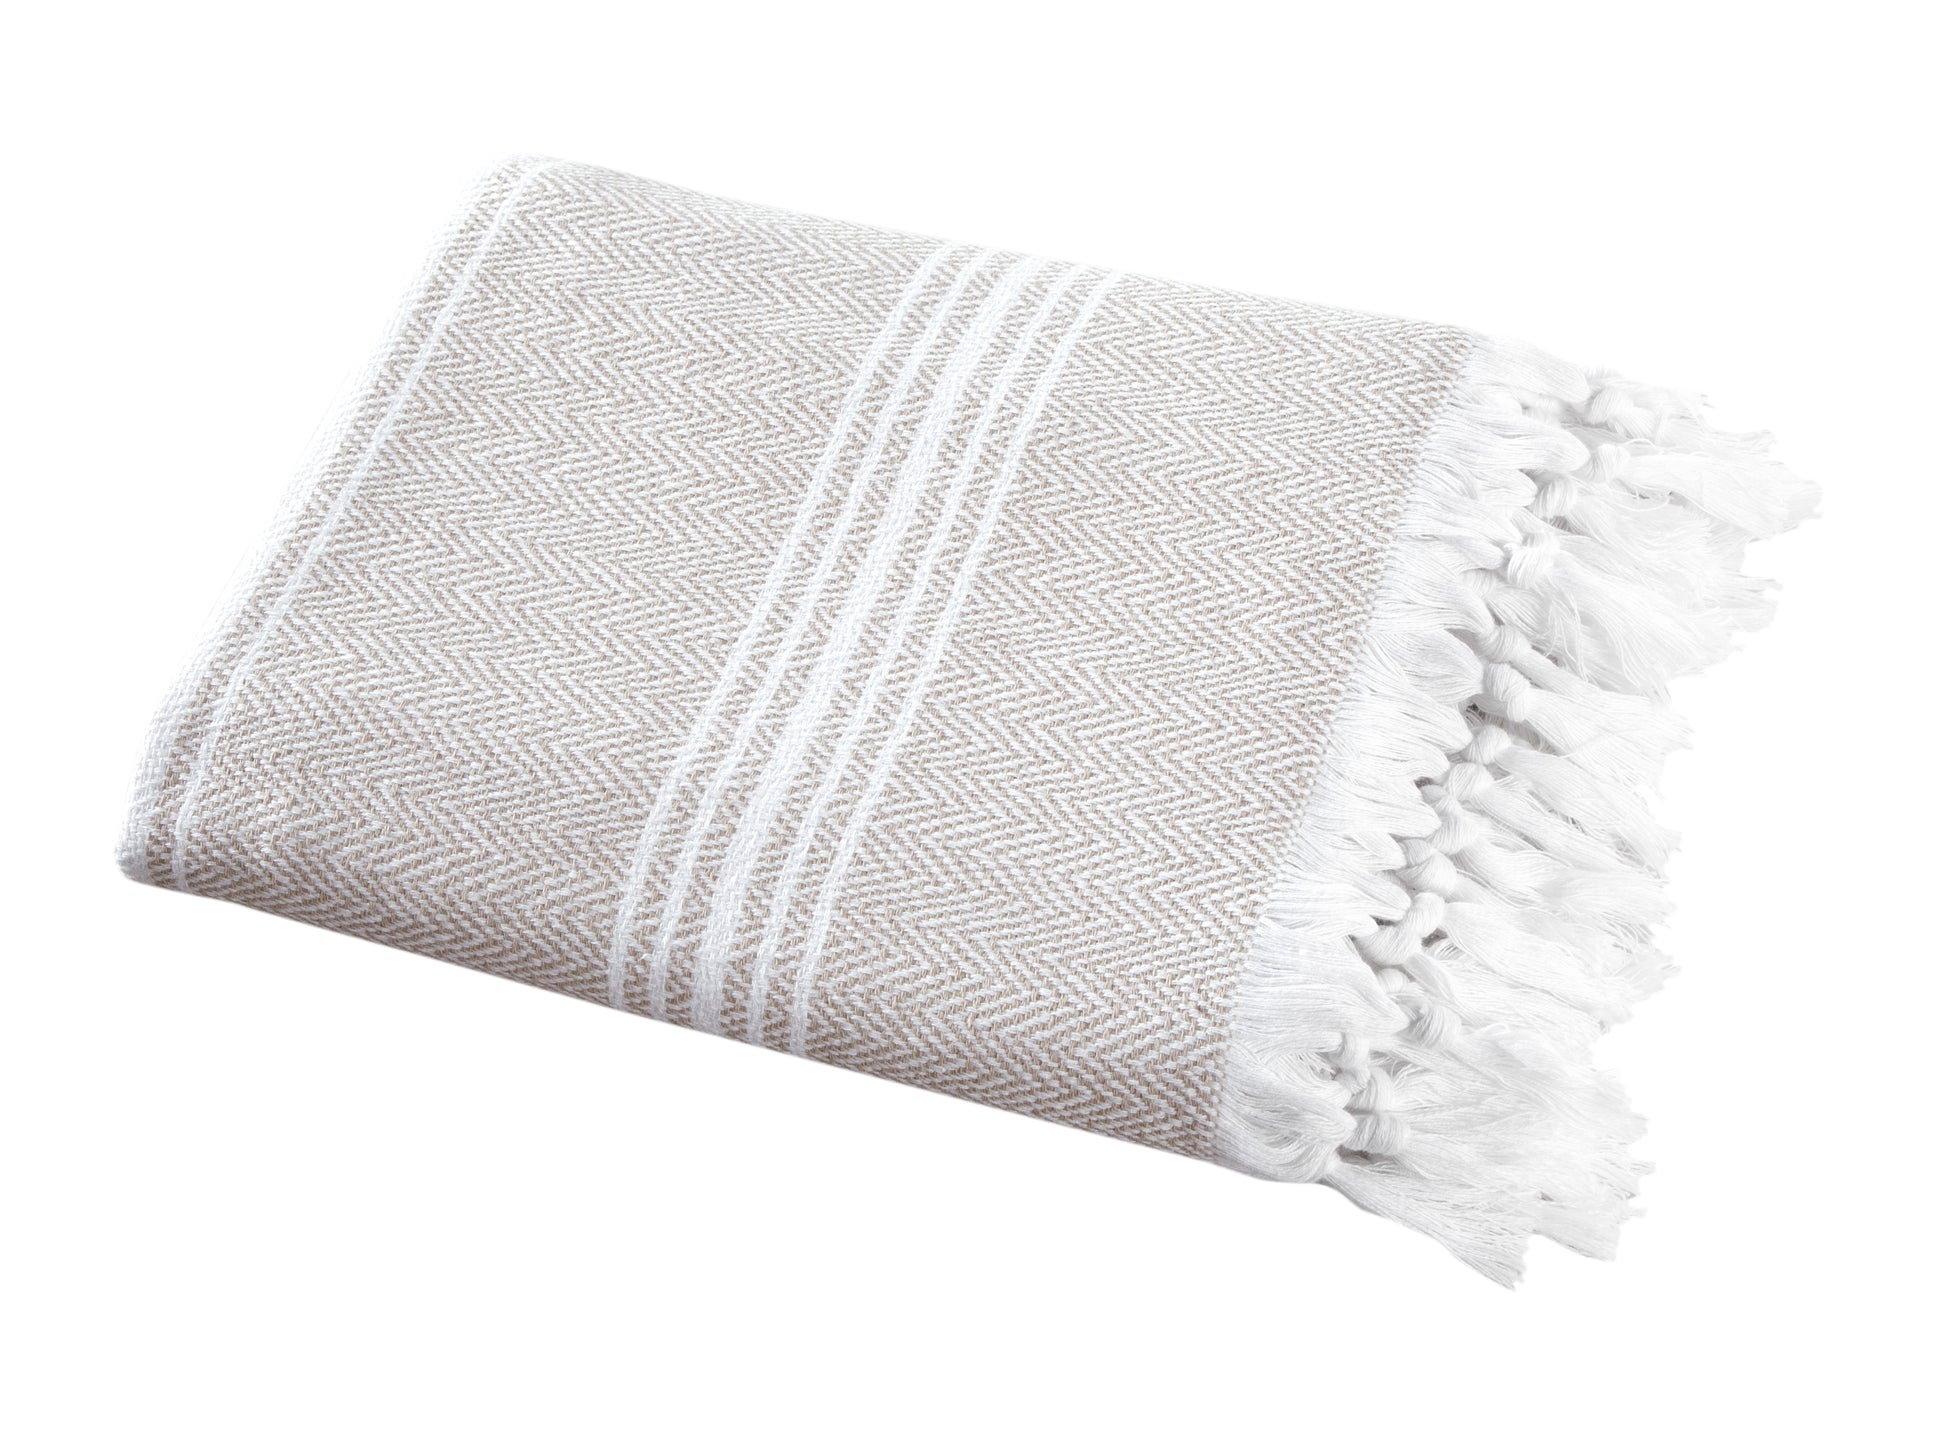 American Soft Linen Jumbo Large Bath Towels, 100% Turkish Cotton Bath Sheet  35 in 70 in, Bath Towel Sheets for Bathroom, Bath Sheet Towels, Sky Blue